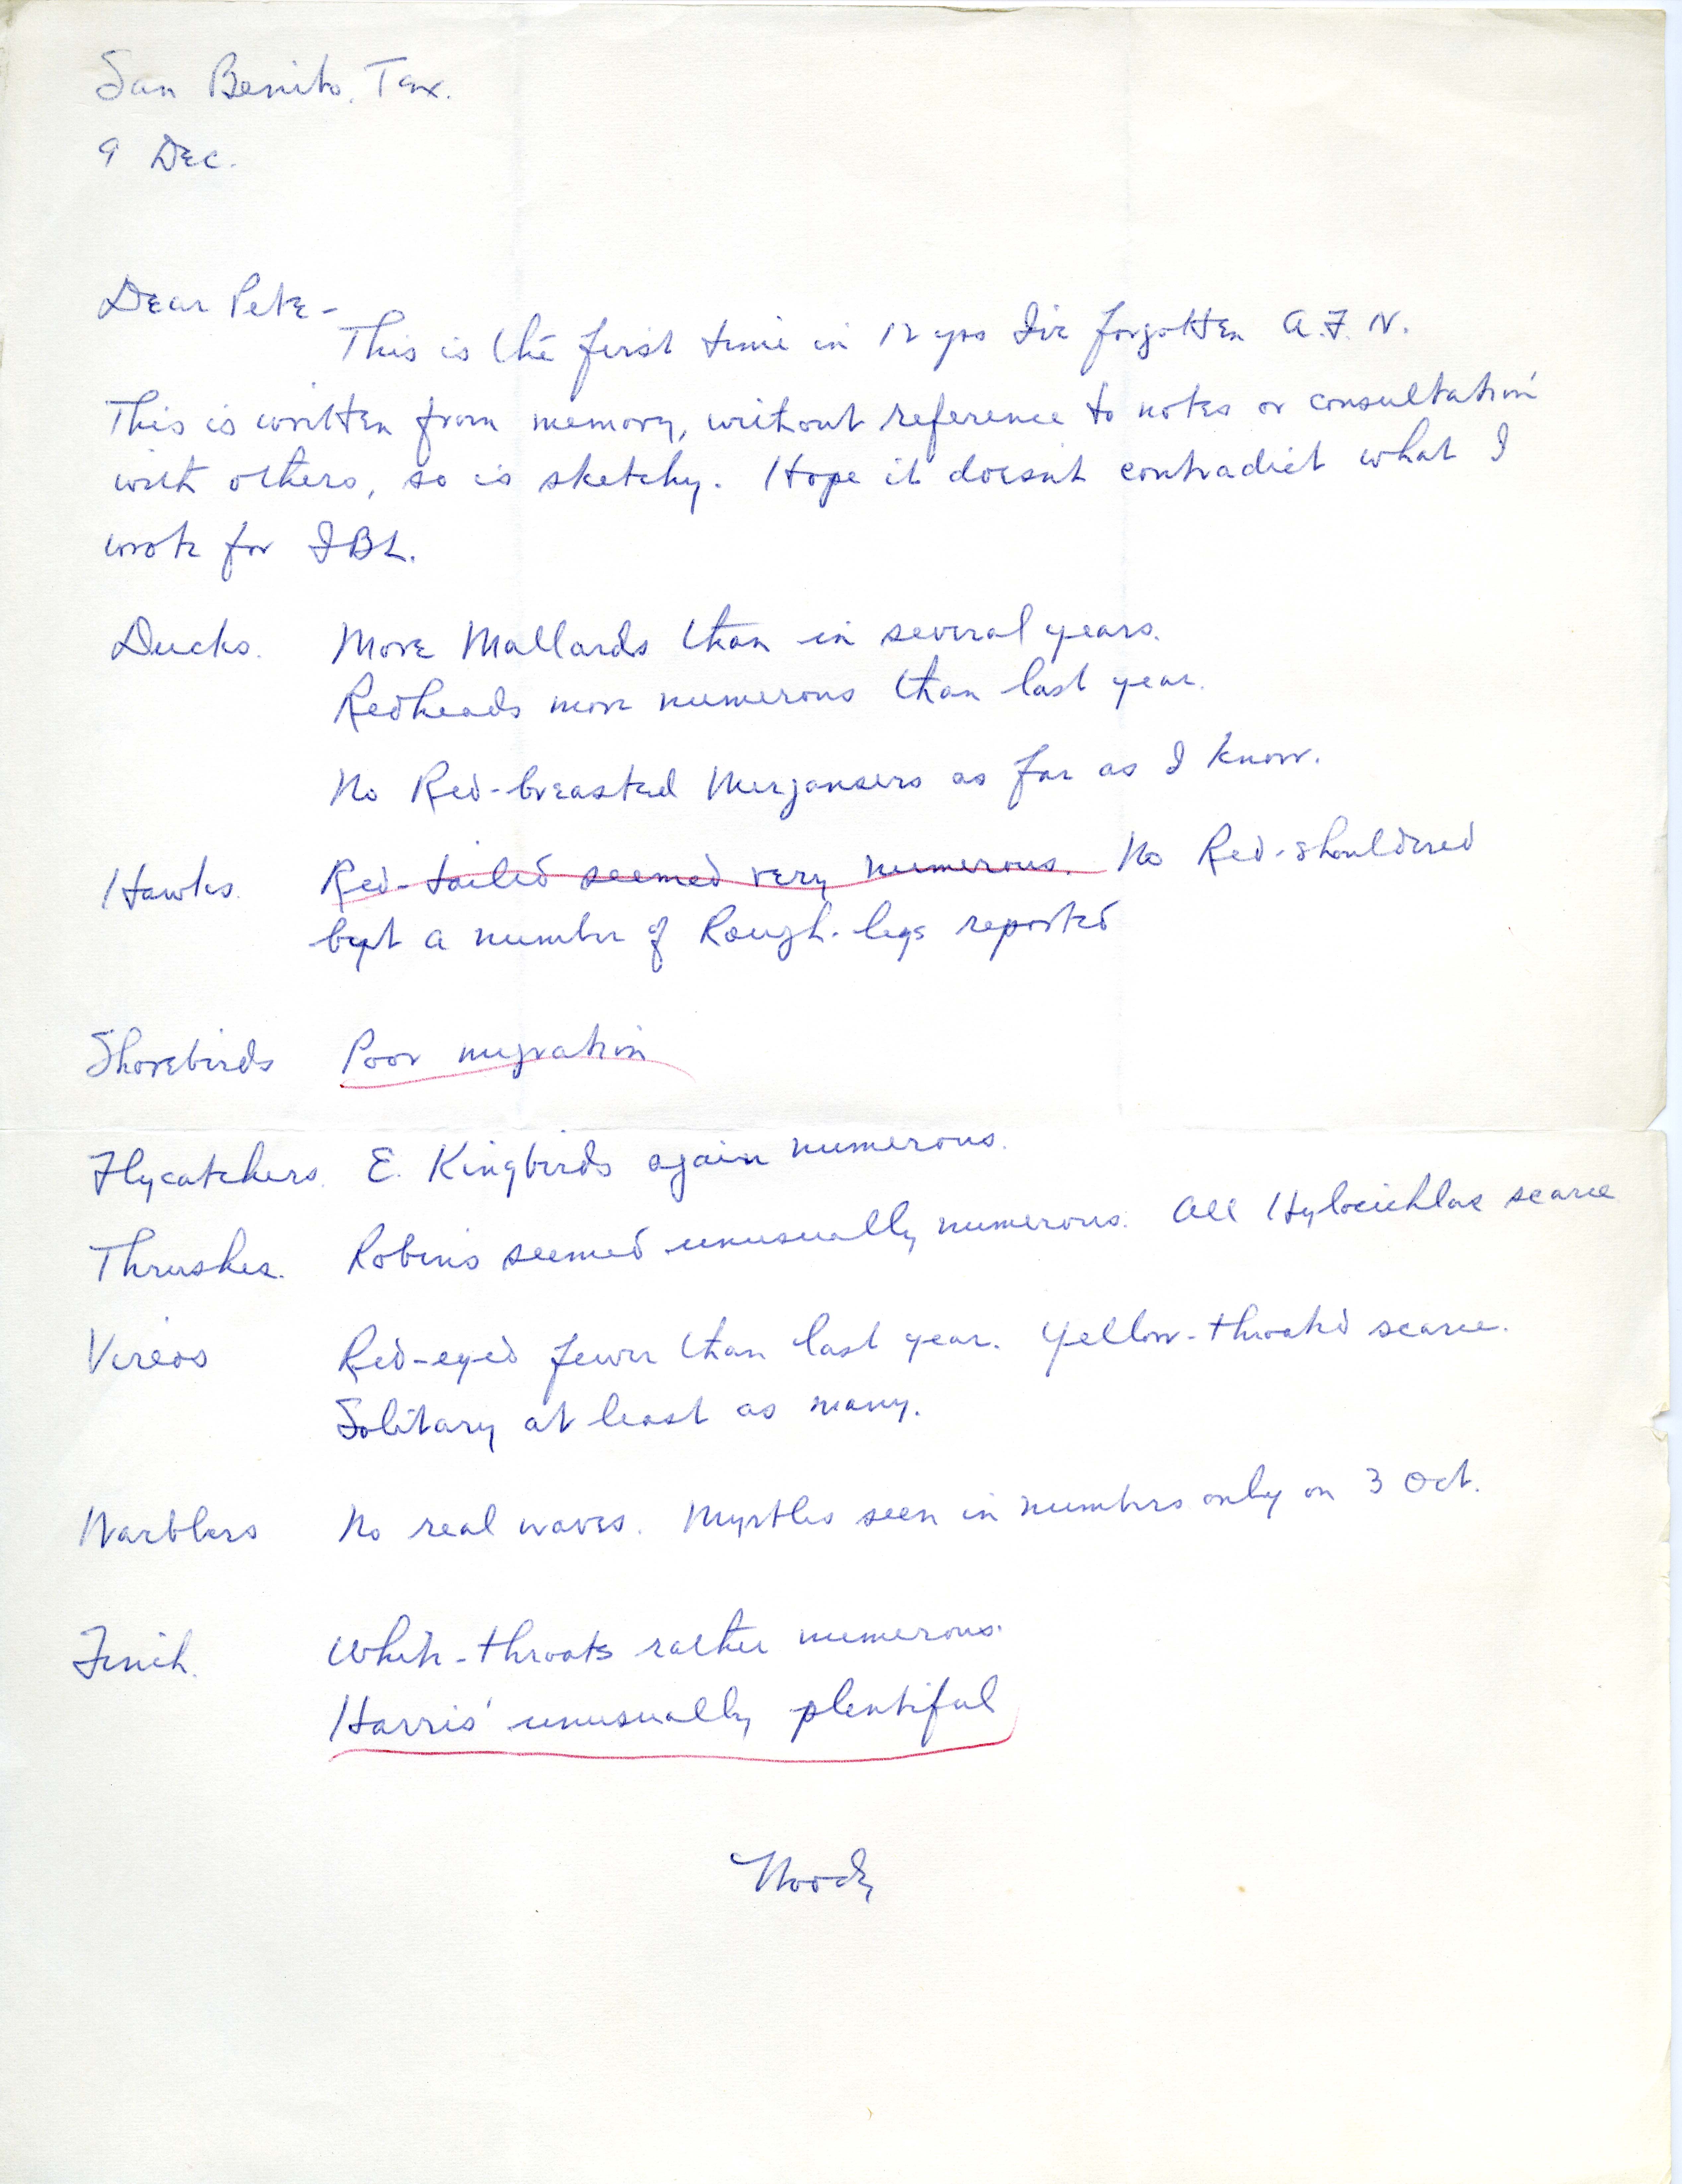 Woodward H. Brown letter to Peter C. Petersen regarding Aubudon field notes, December 9, 1964